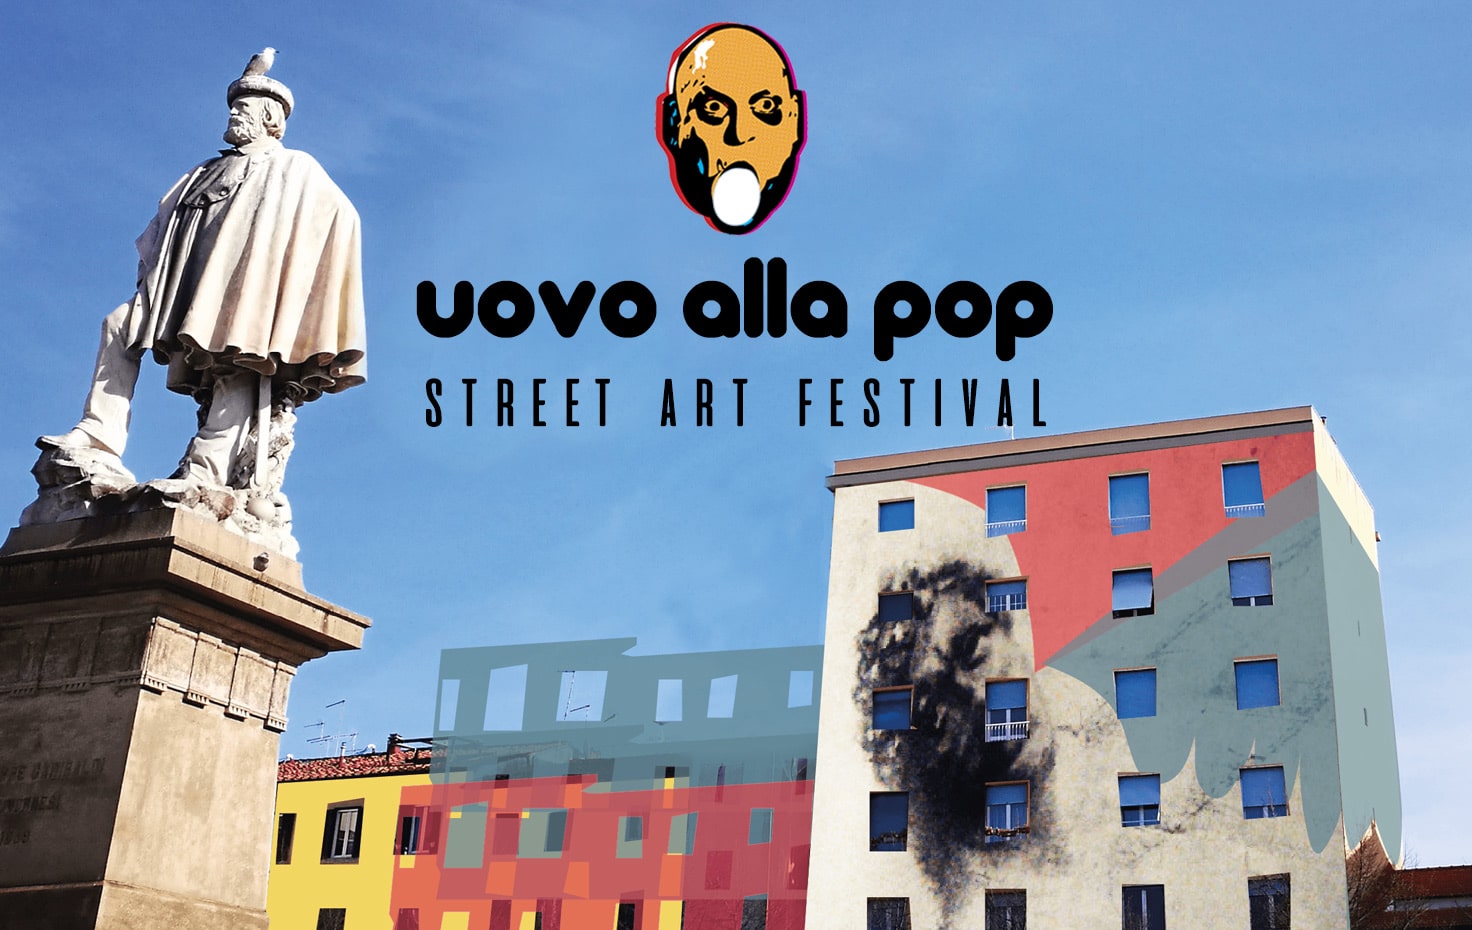 Uovo alla pop street art festival